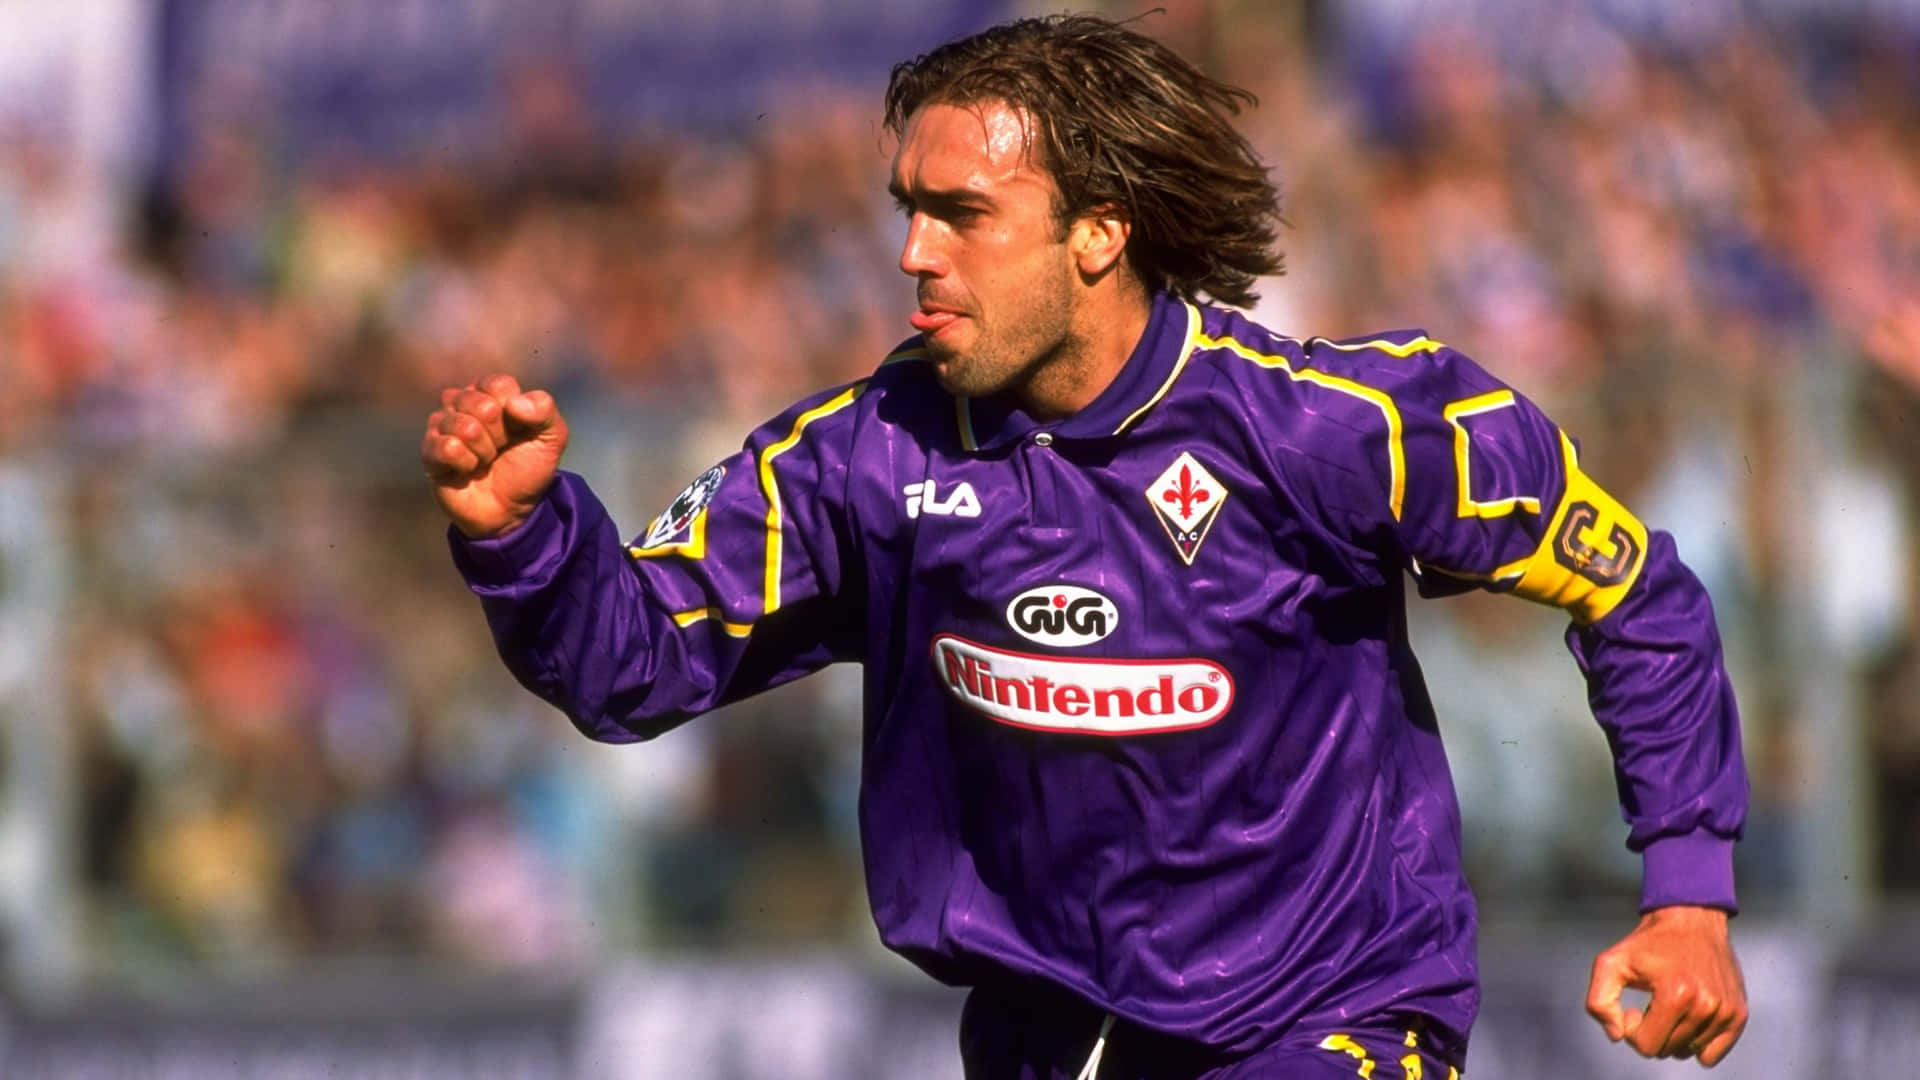 Fiorentinafutbolista Gabriel Batistuta Con La Lengua Afuera. Fondo de pantalla